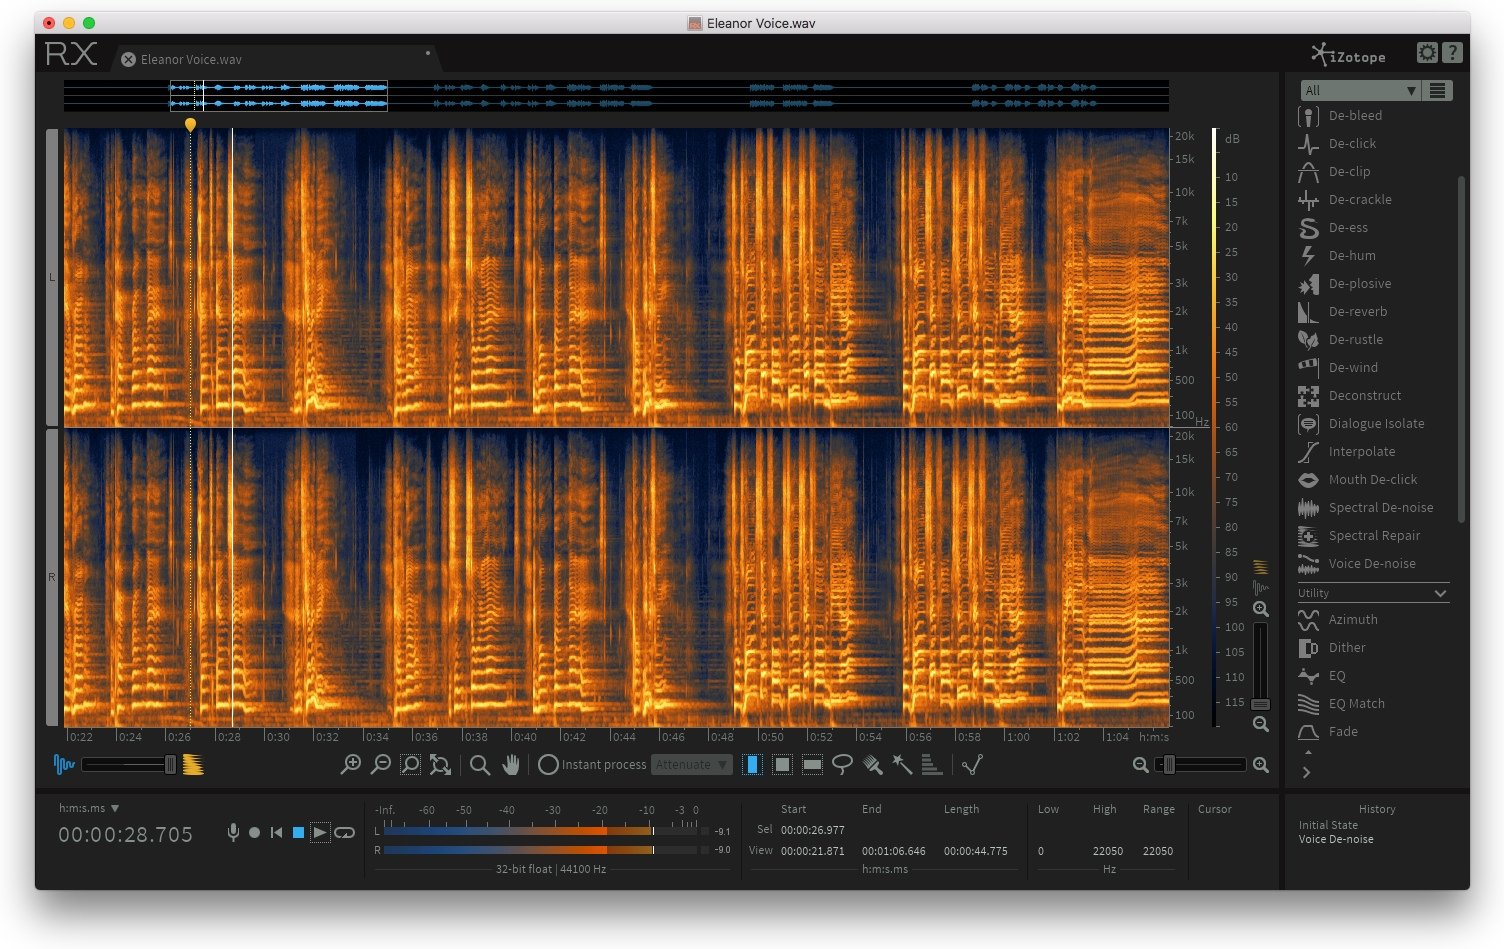 izotope rx 6 advanced audio editor review